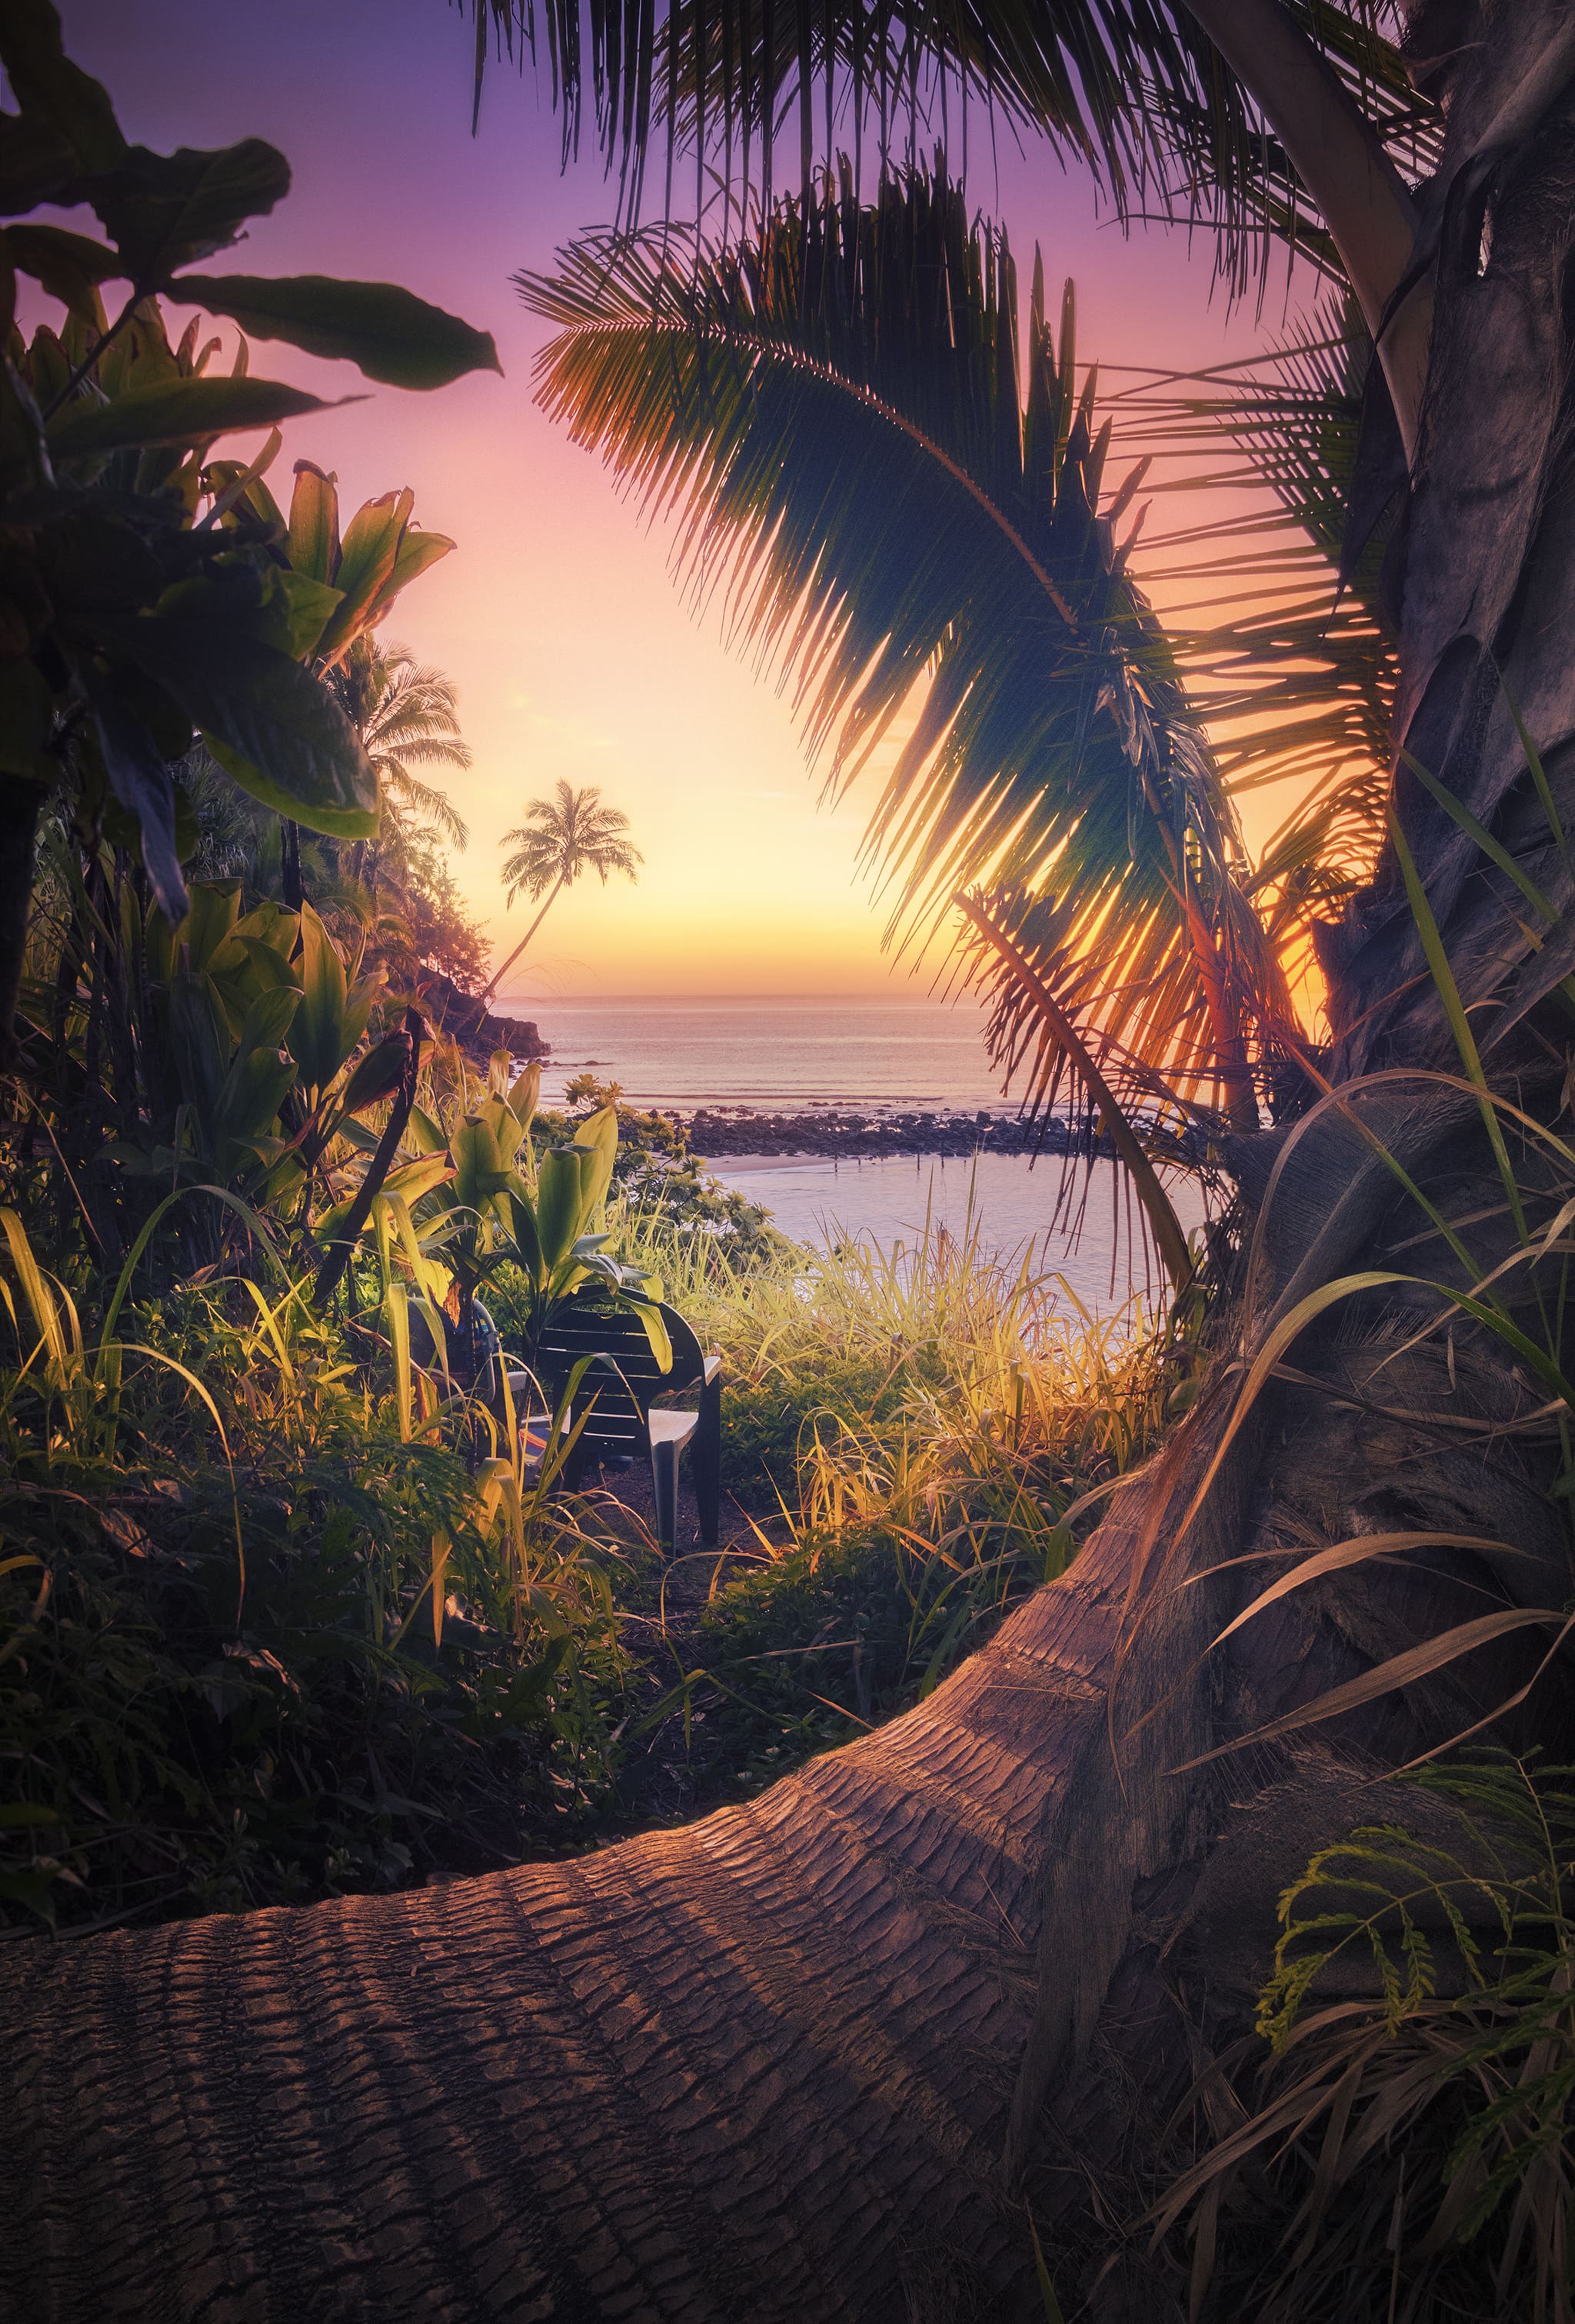 Palm trees in Kauai Hawaii